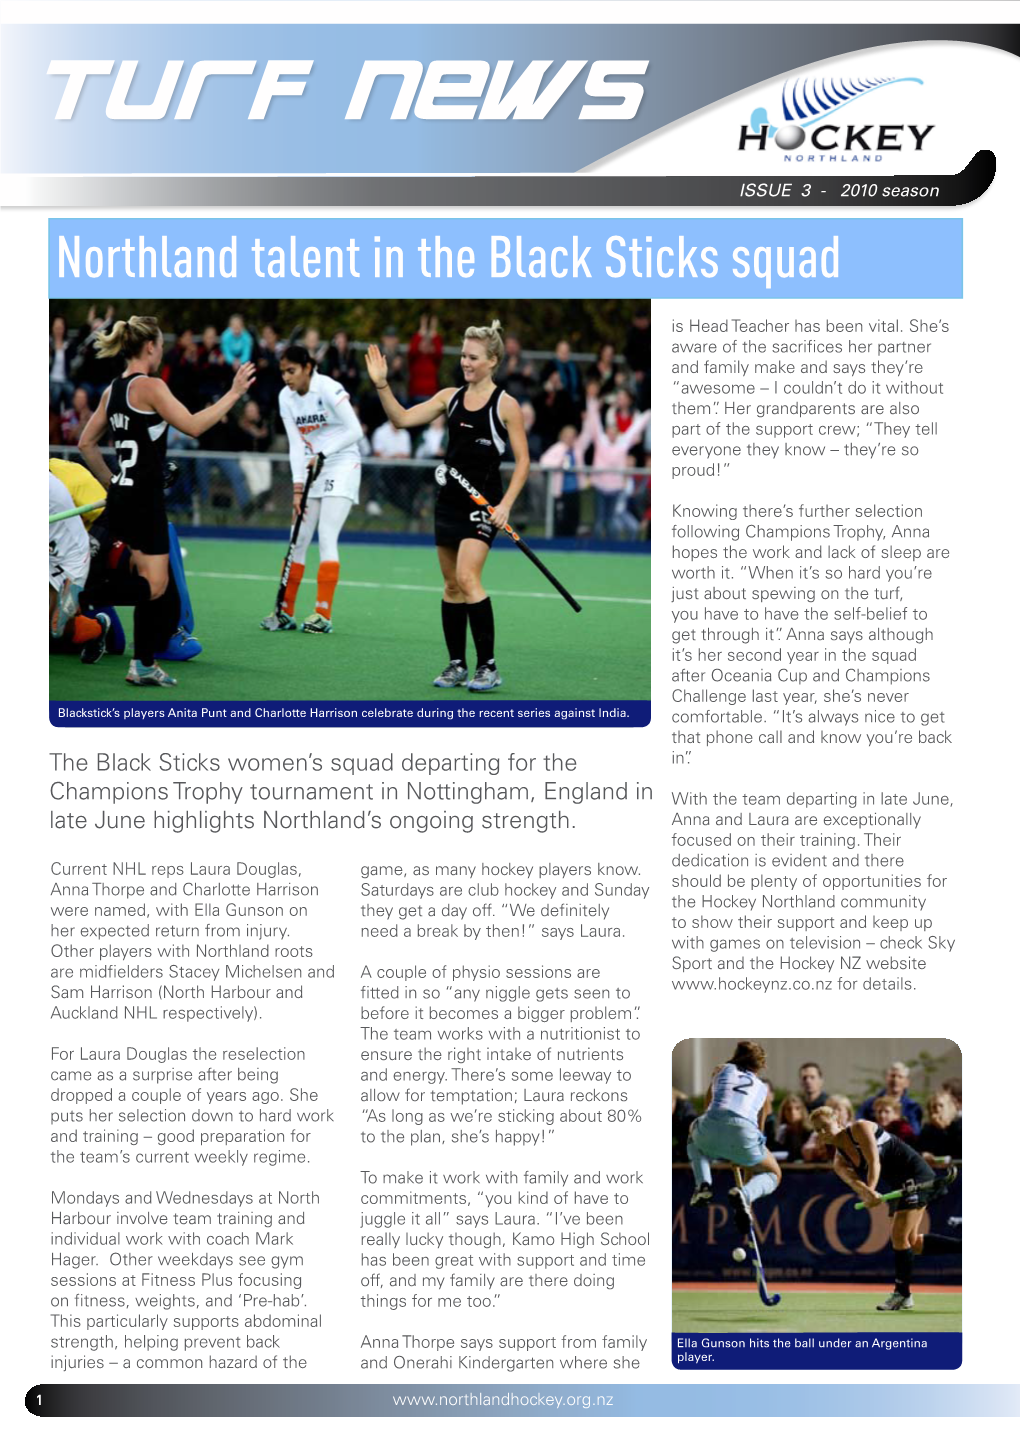 Northland Talent in the Black Sticks Squad